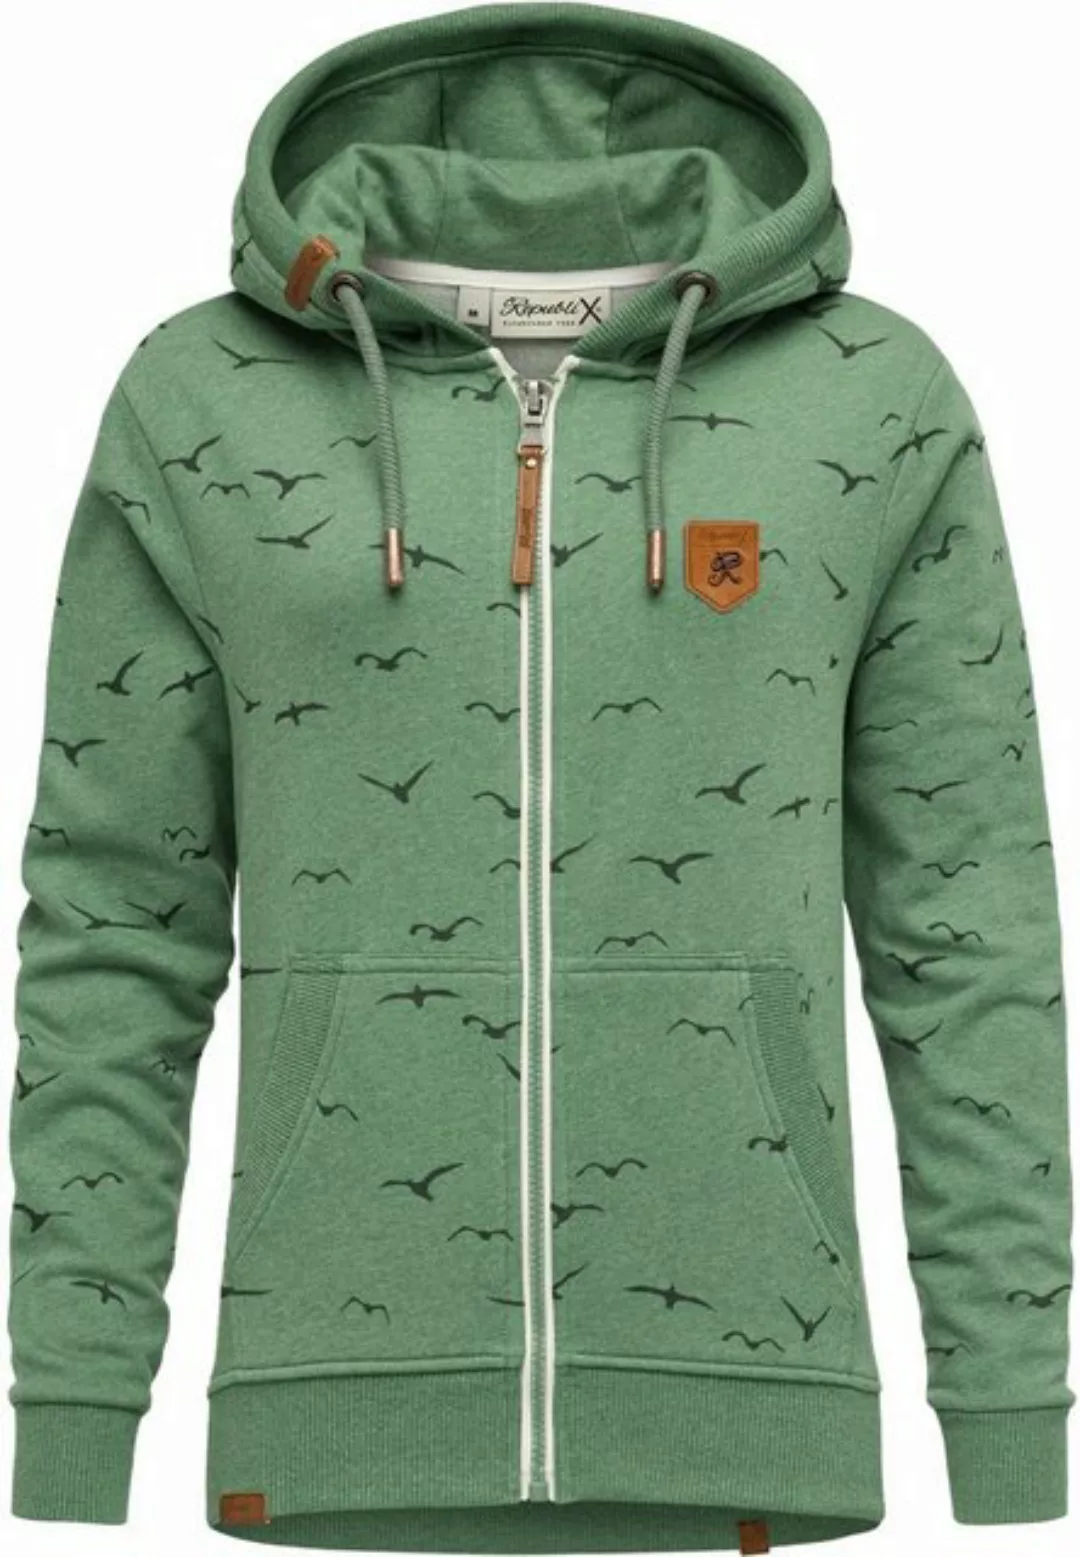 REPUBLIX Kapuzenpullover LOLA Damen Hoodie Sweatshirt Pullover Zipper Jacke günstig online kaufen